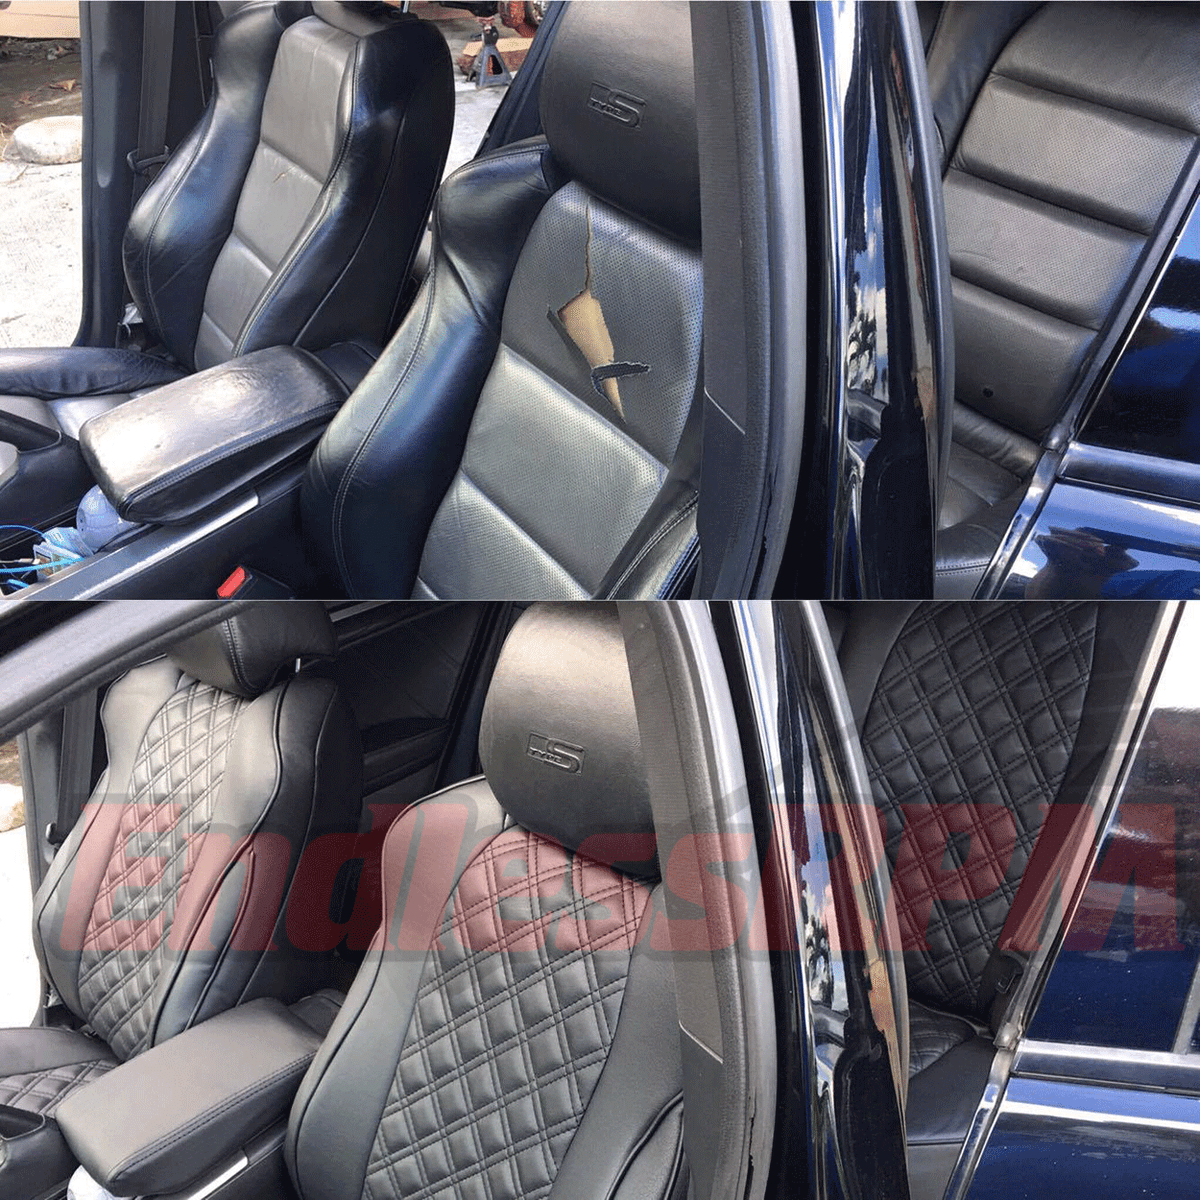 Clazzio Acura Tl Seat Cover Replacements